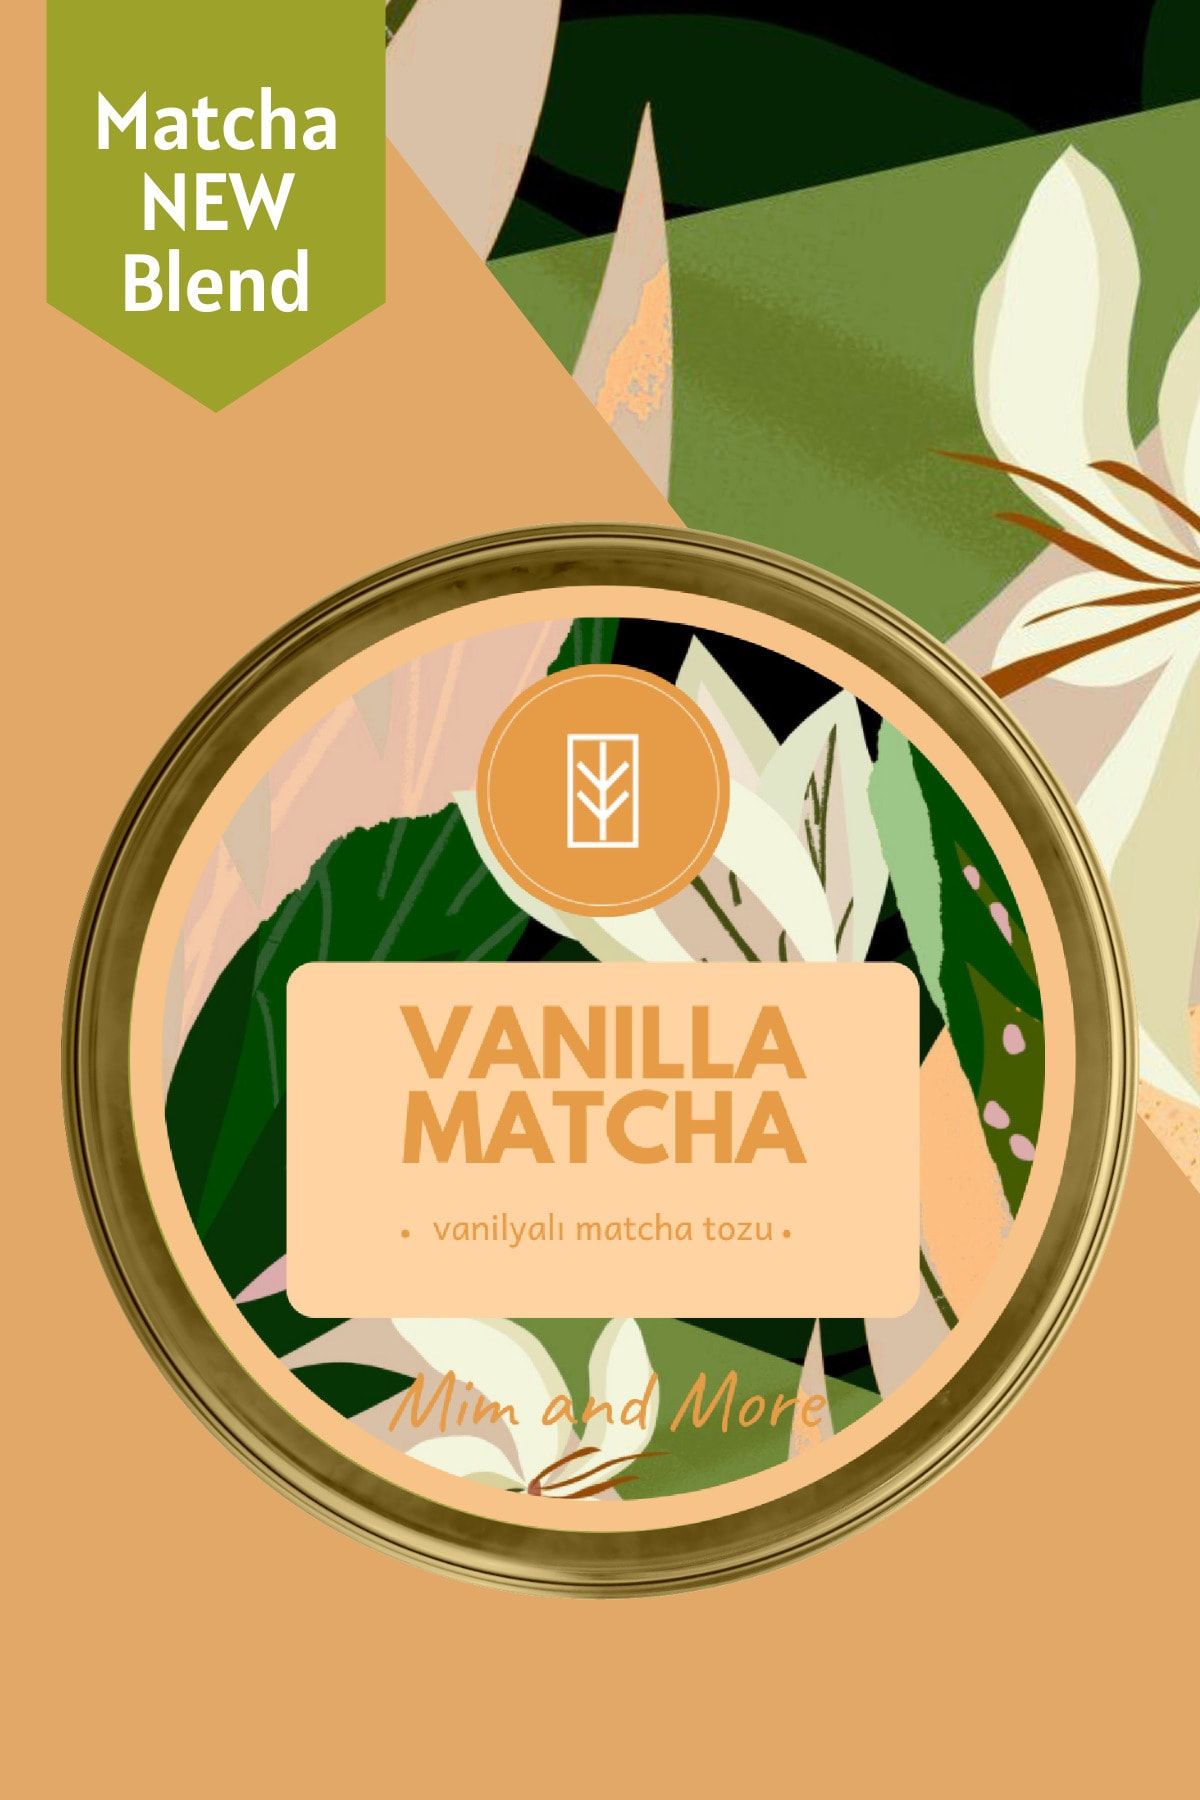 Mim and More Vanilla Matcha - Vanilyalı Matcha